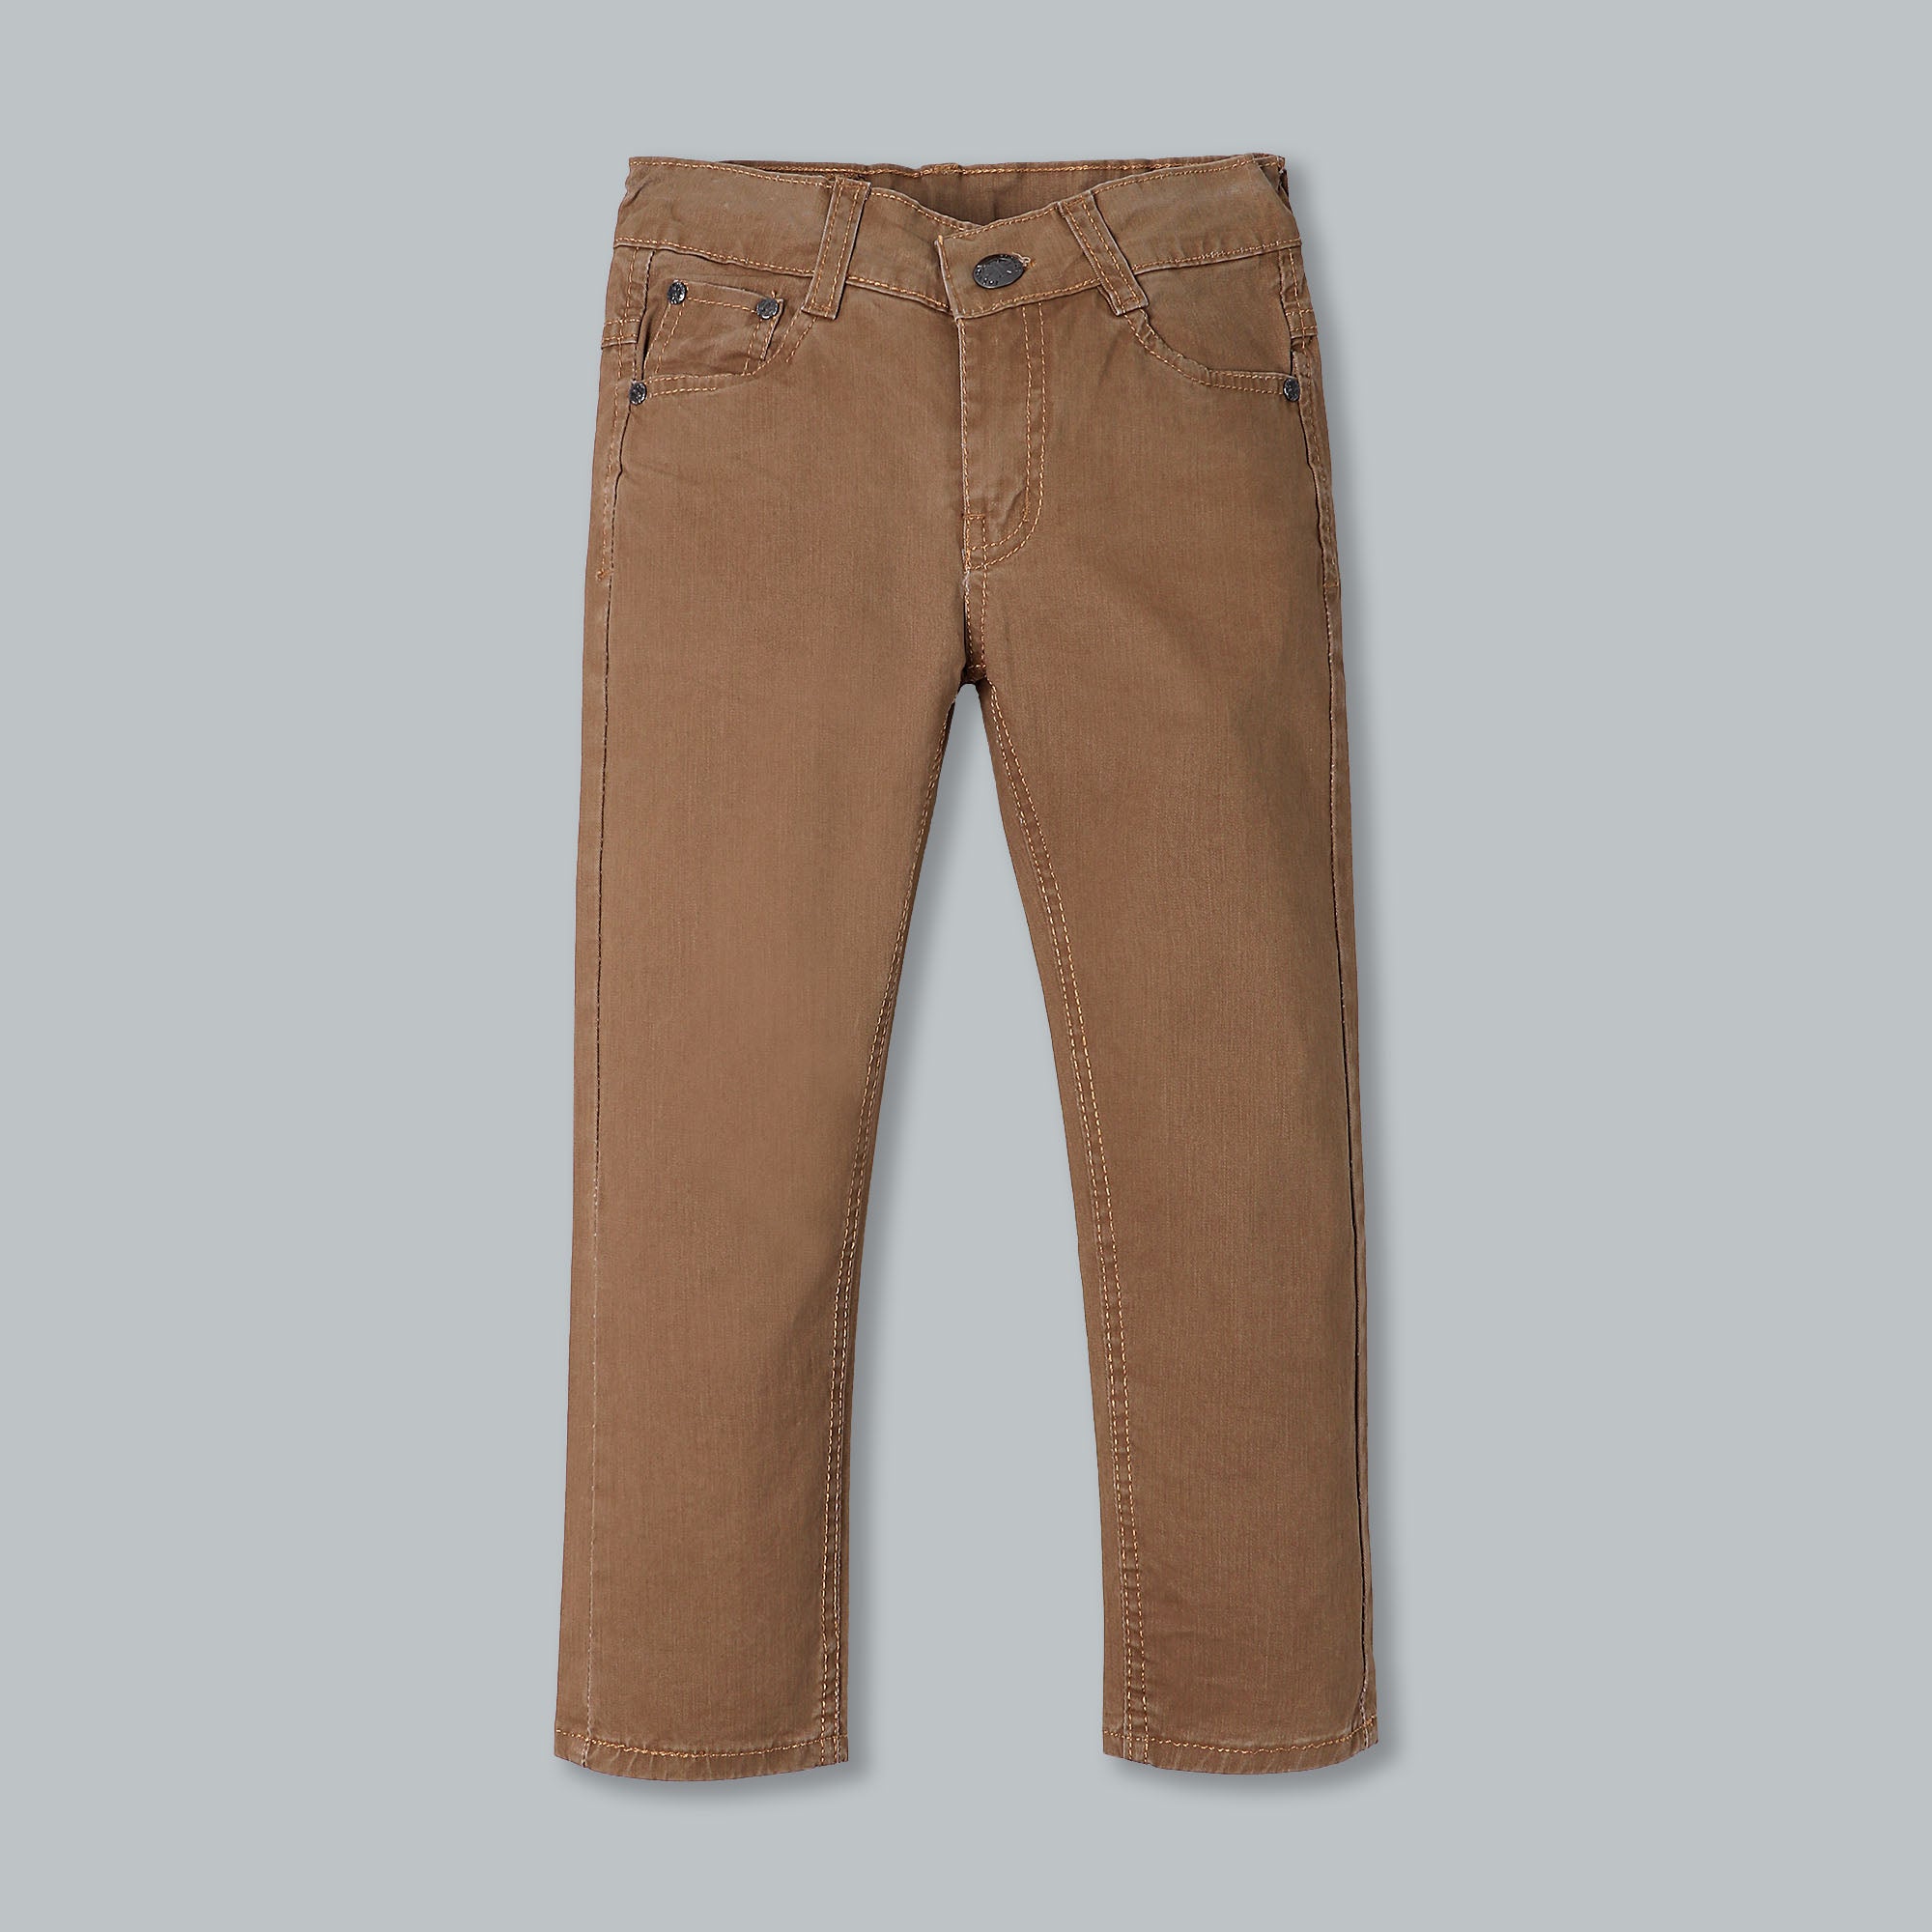 Brown Denim cotton pants